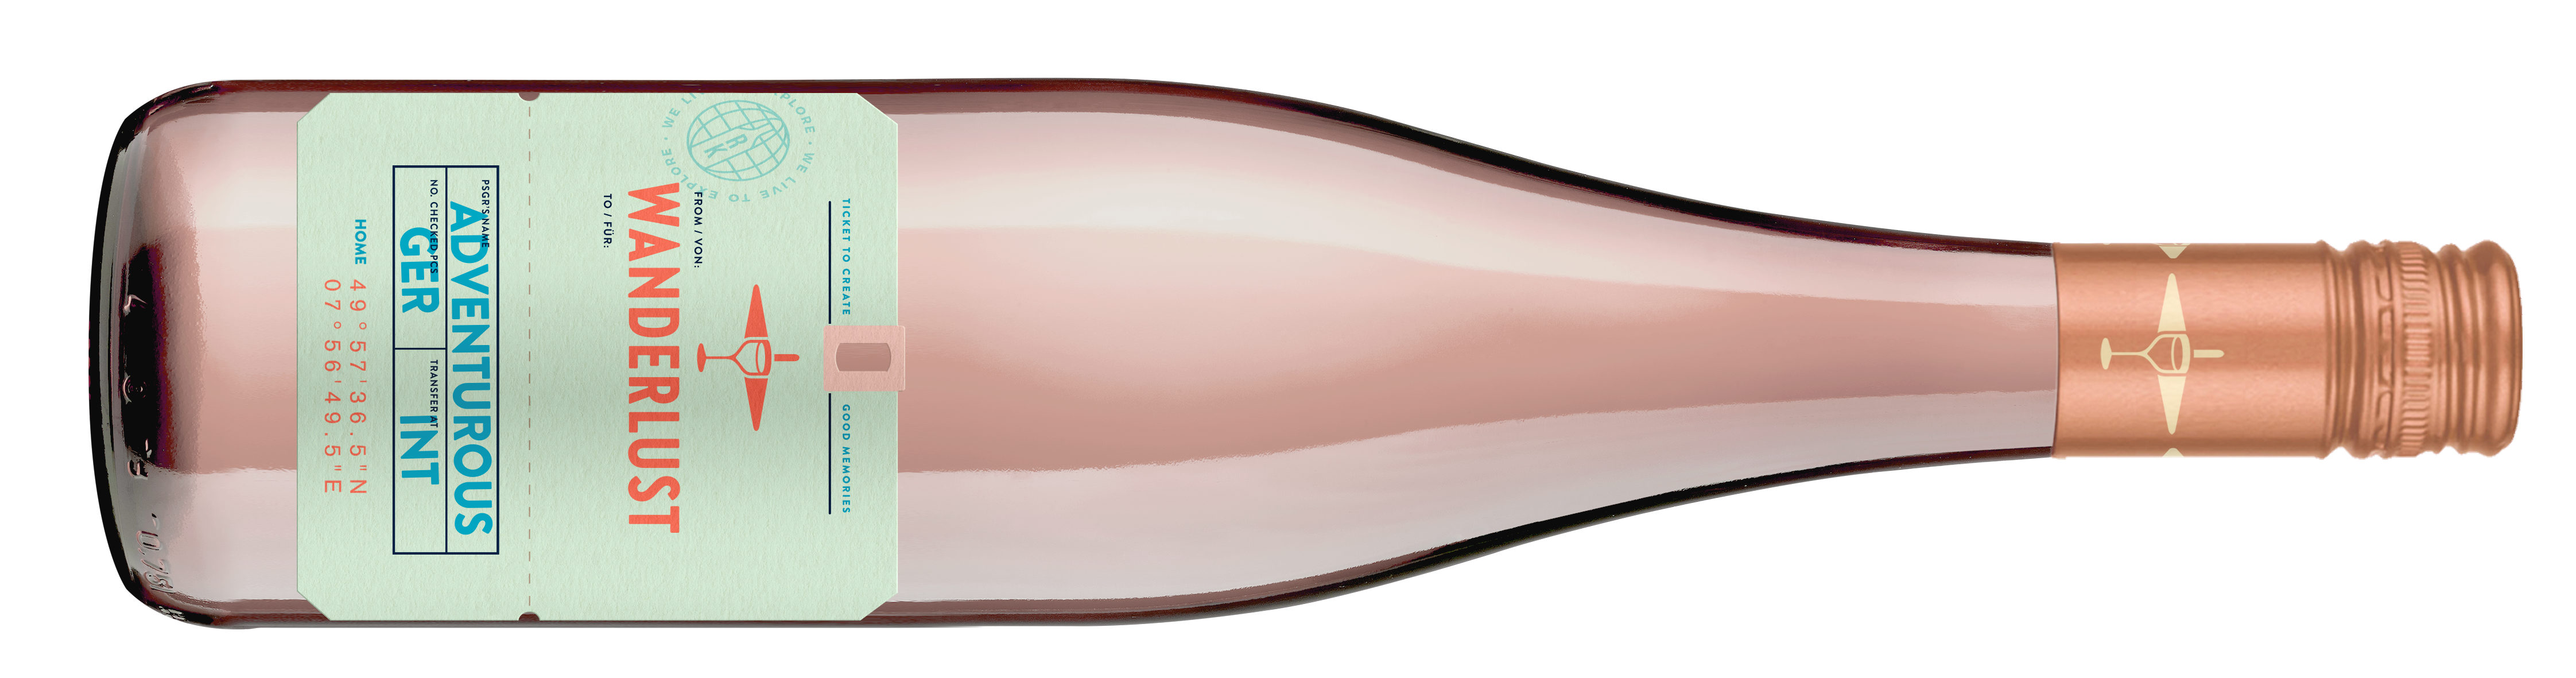 Adventurous rosé Wein